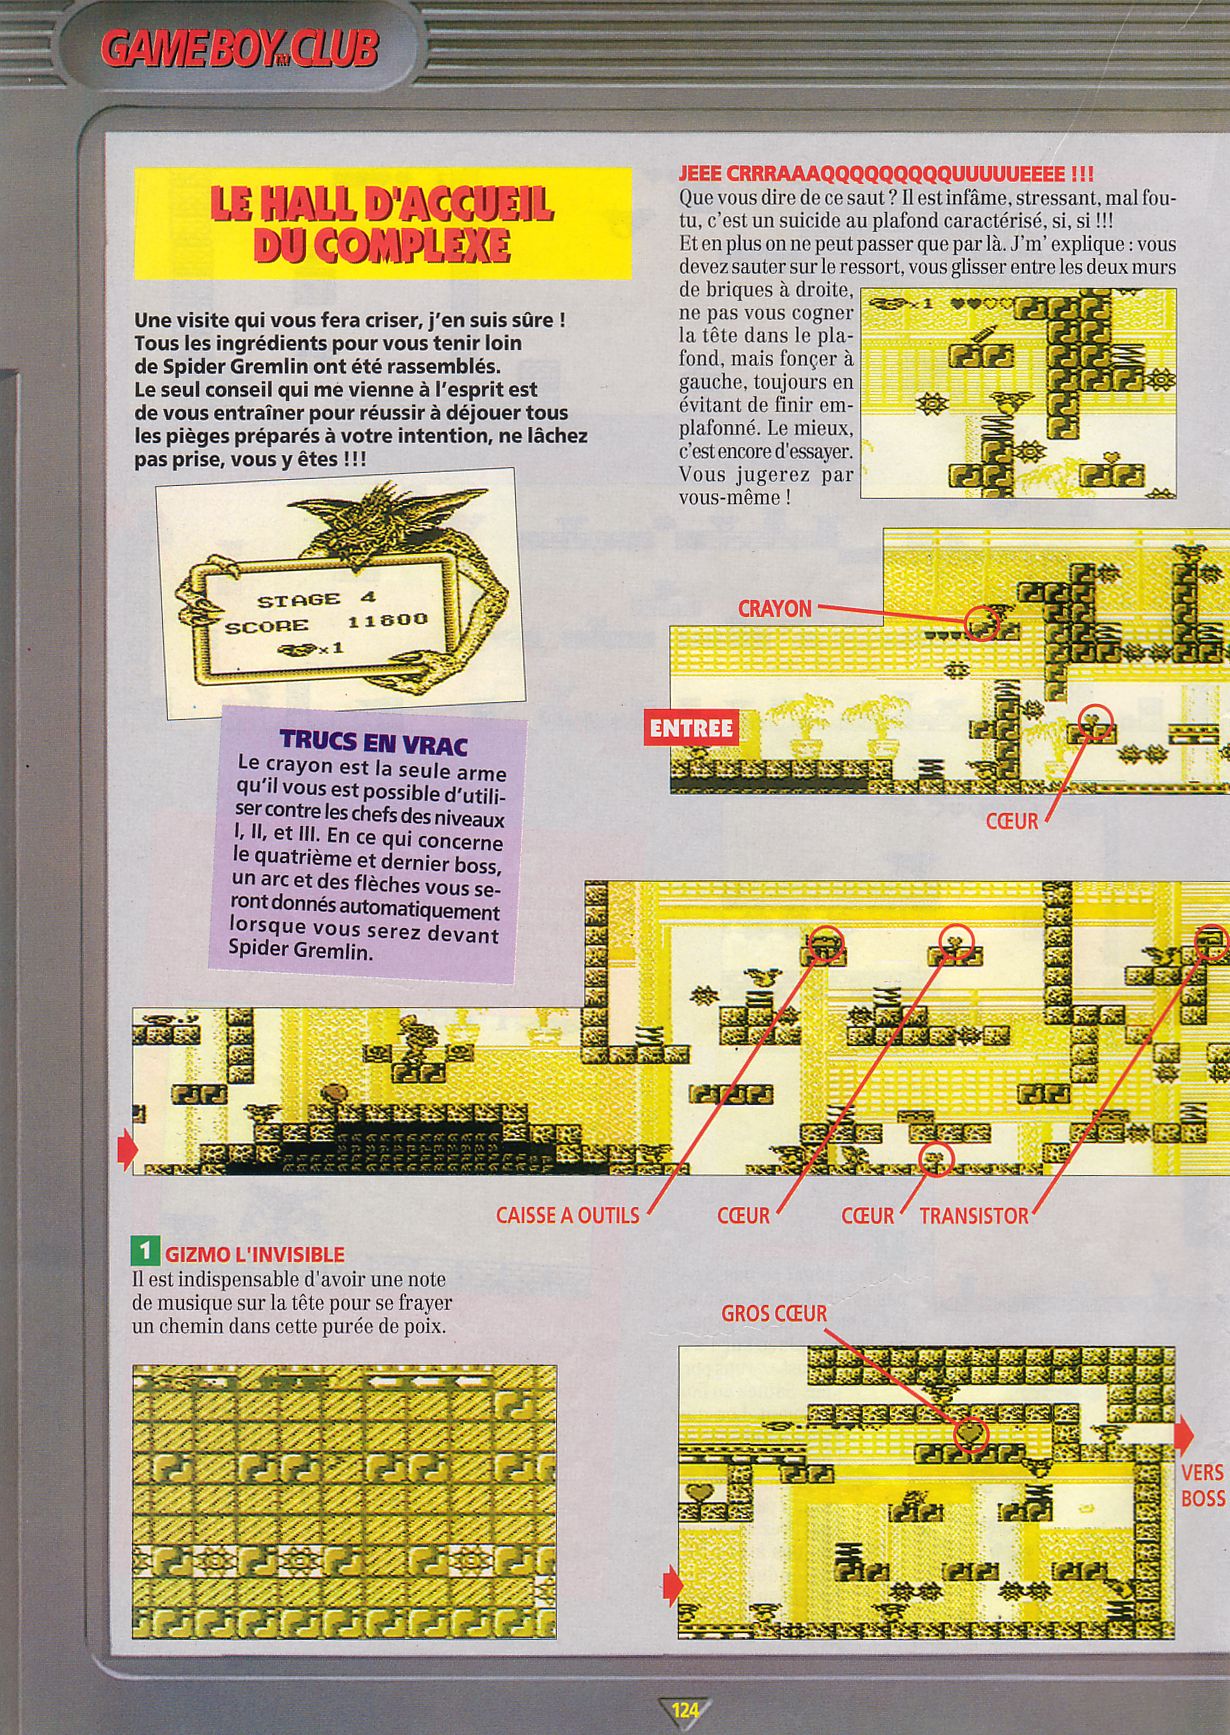 tests//813/Nintendo Player 007 - Page 124 (1992-11-12).jpg